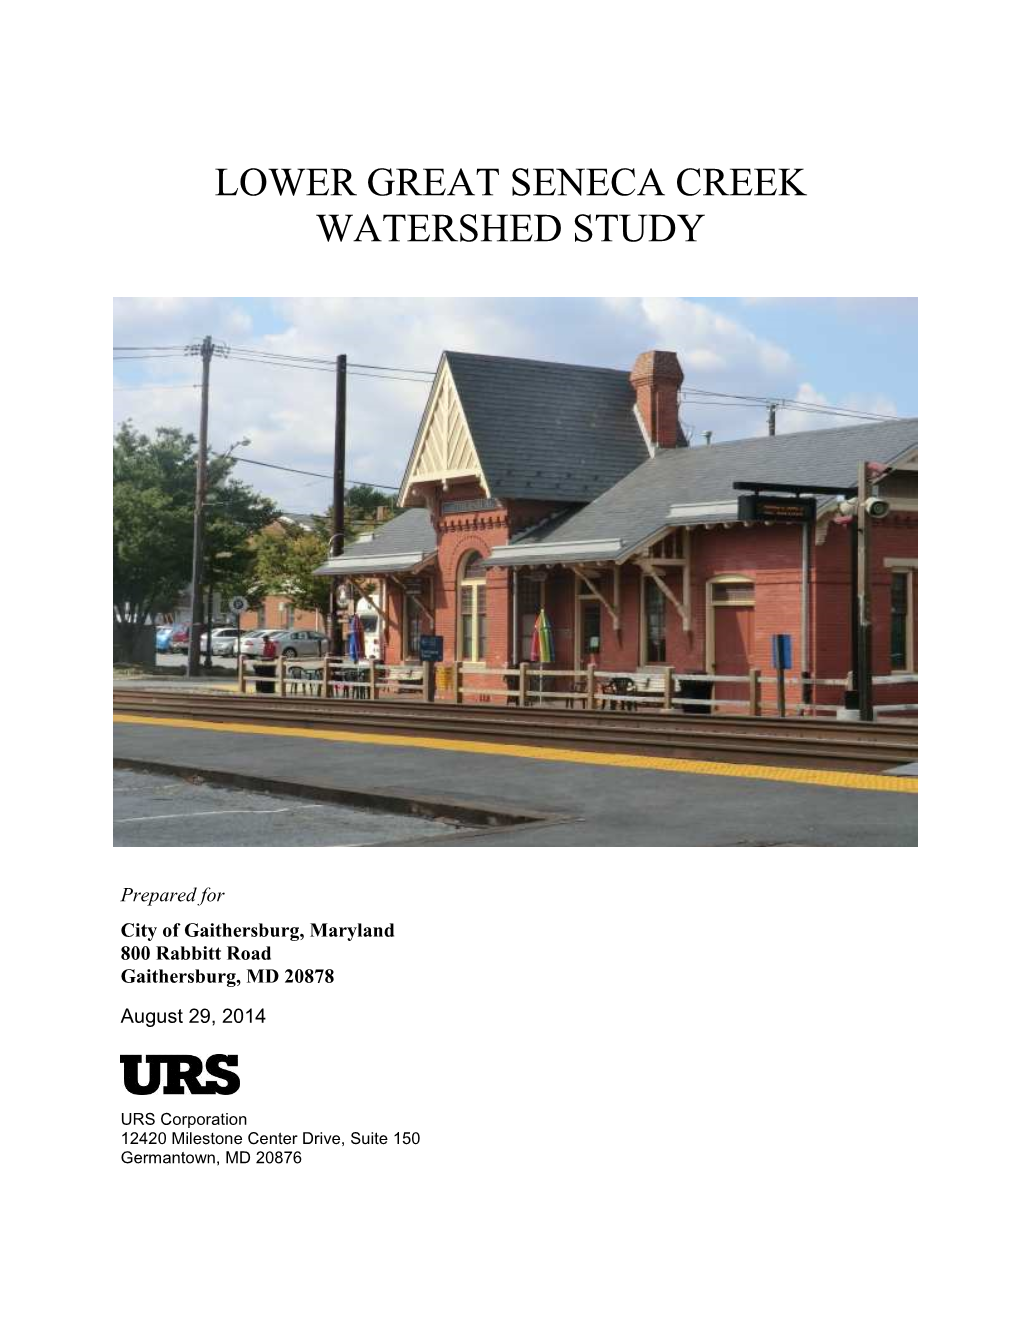 Lower Great Seneca Creek Watershed Study